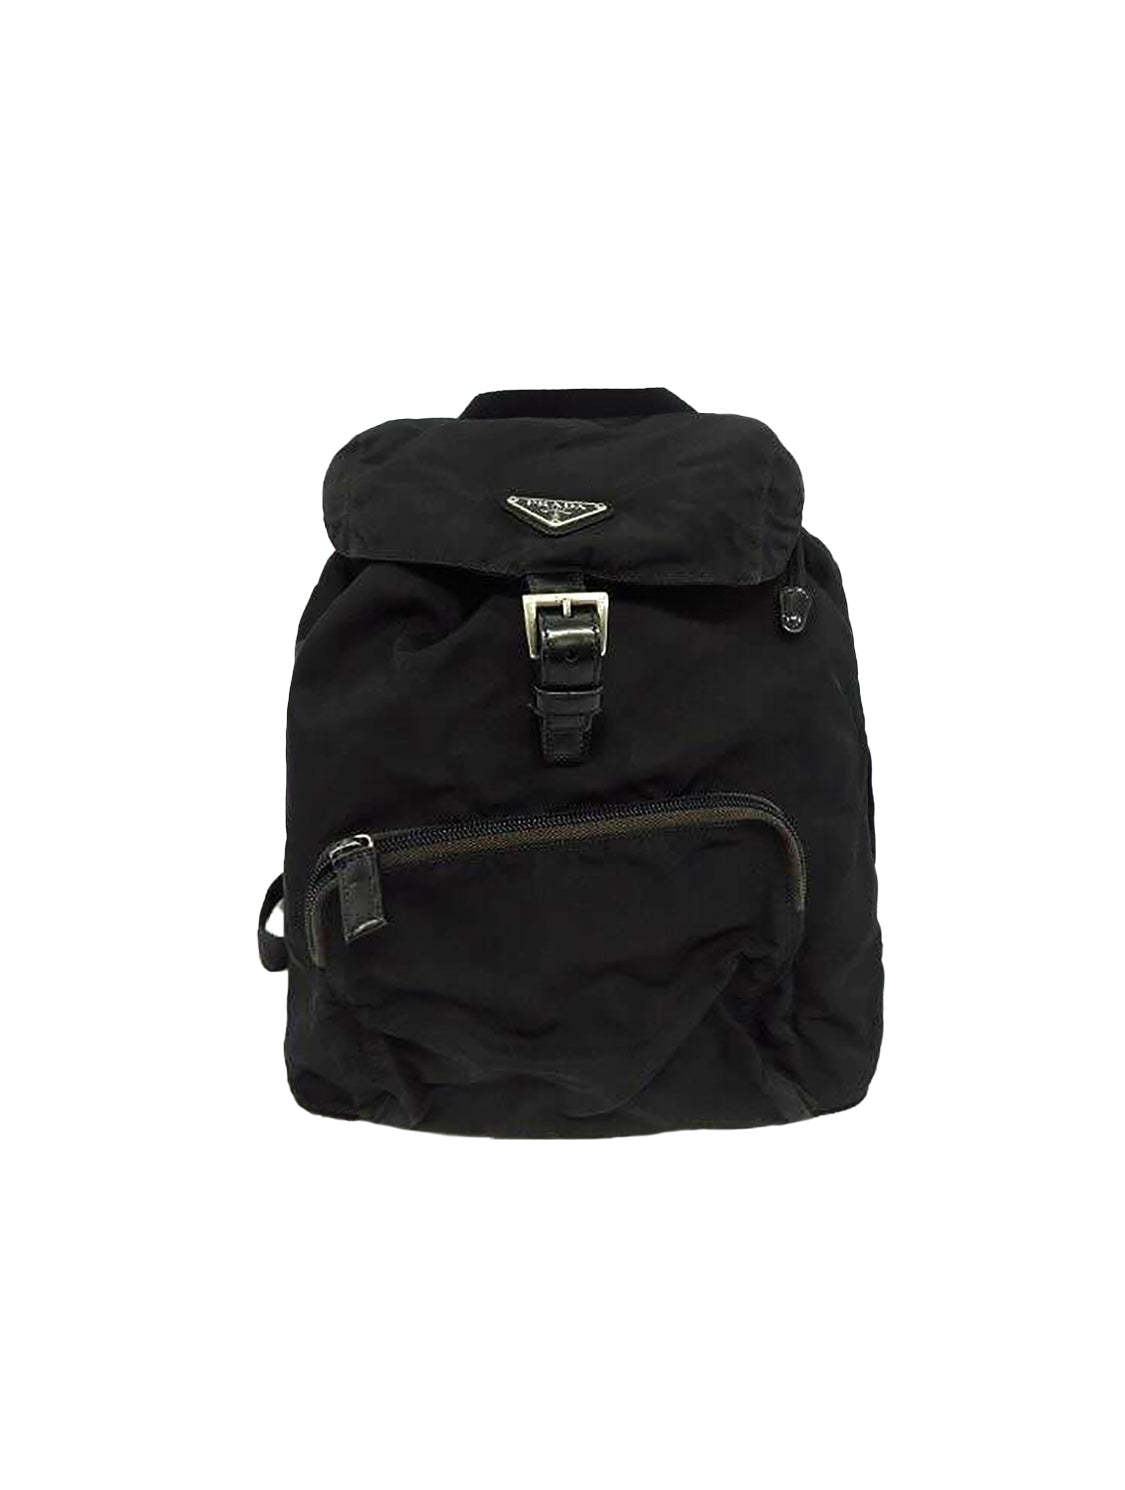 Prada 2000s Black Canvas Backpack